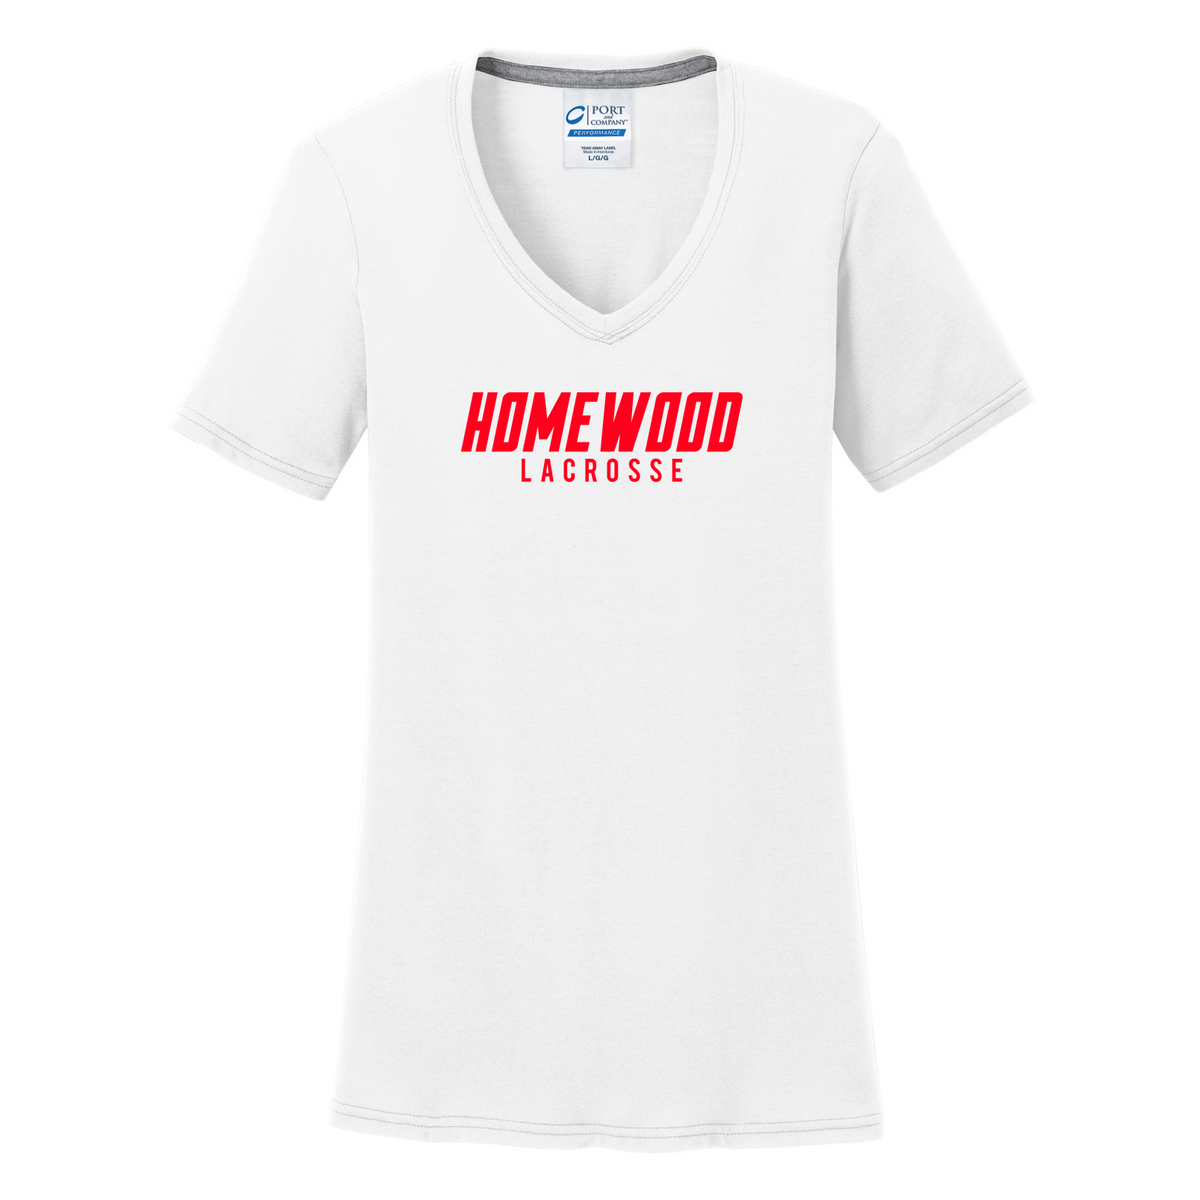 Homewood Lacrosse Women's T-Shirt